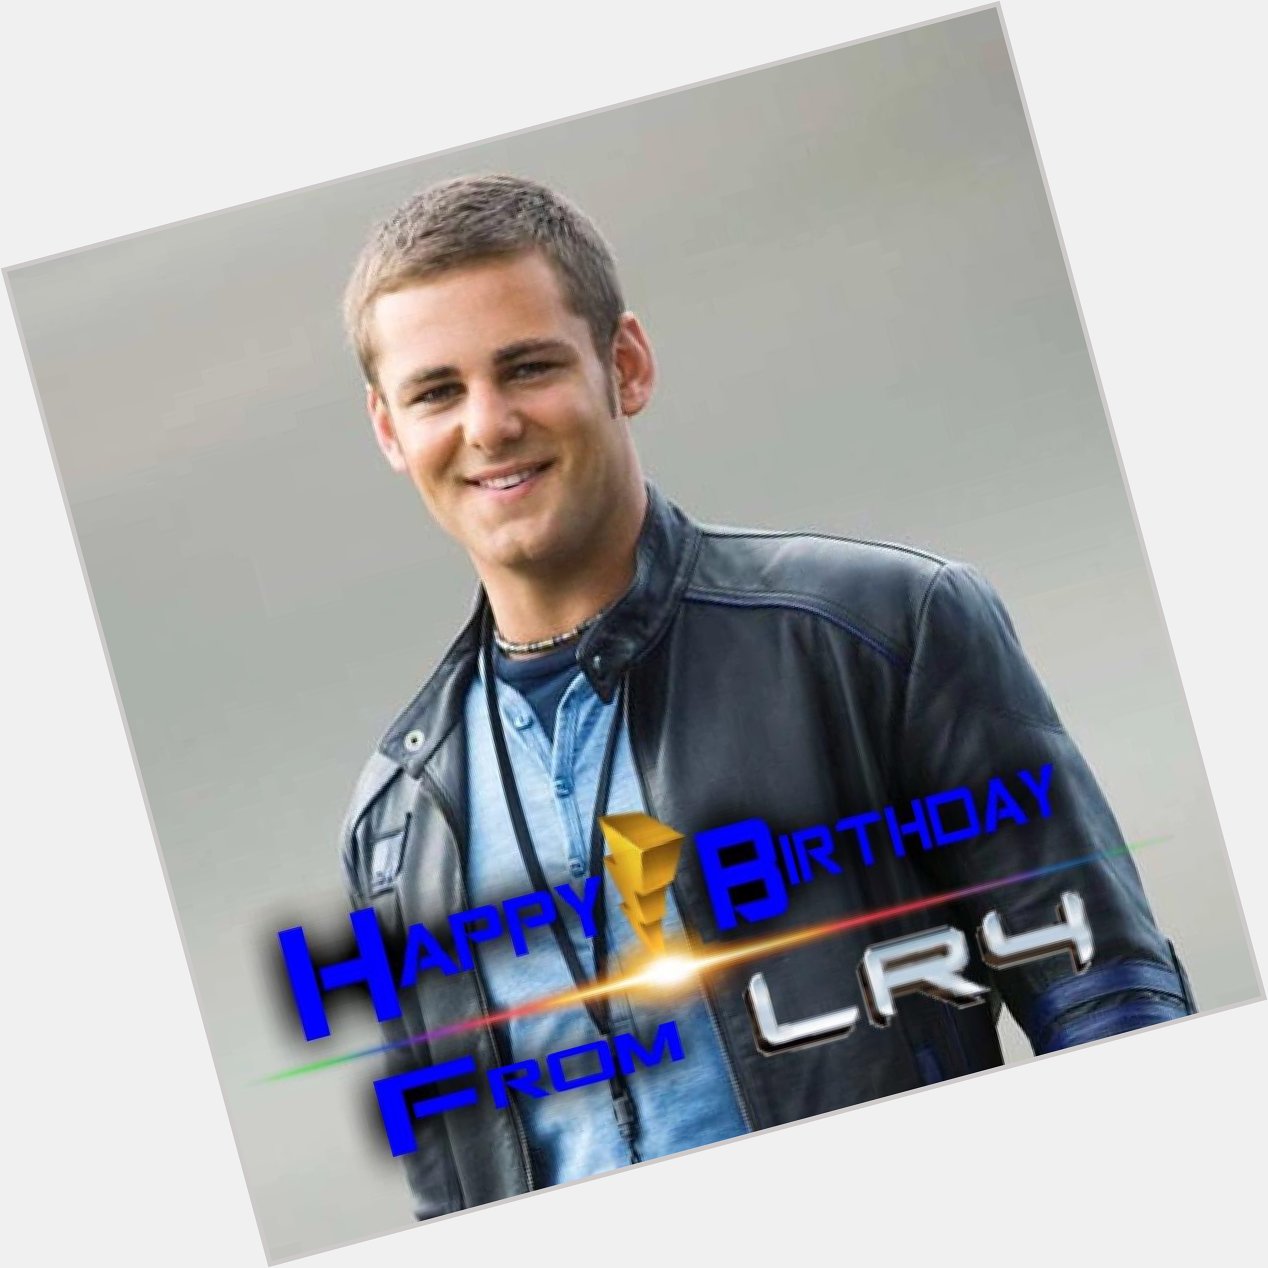 LR4 would also like to wish Ari Boyland a Happy Birthday! 